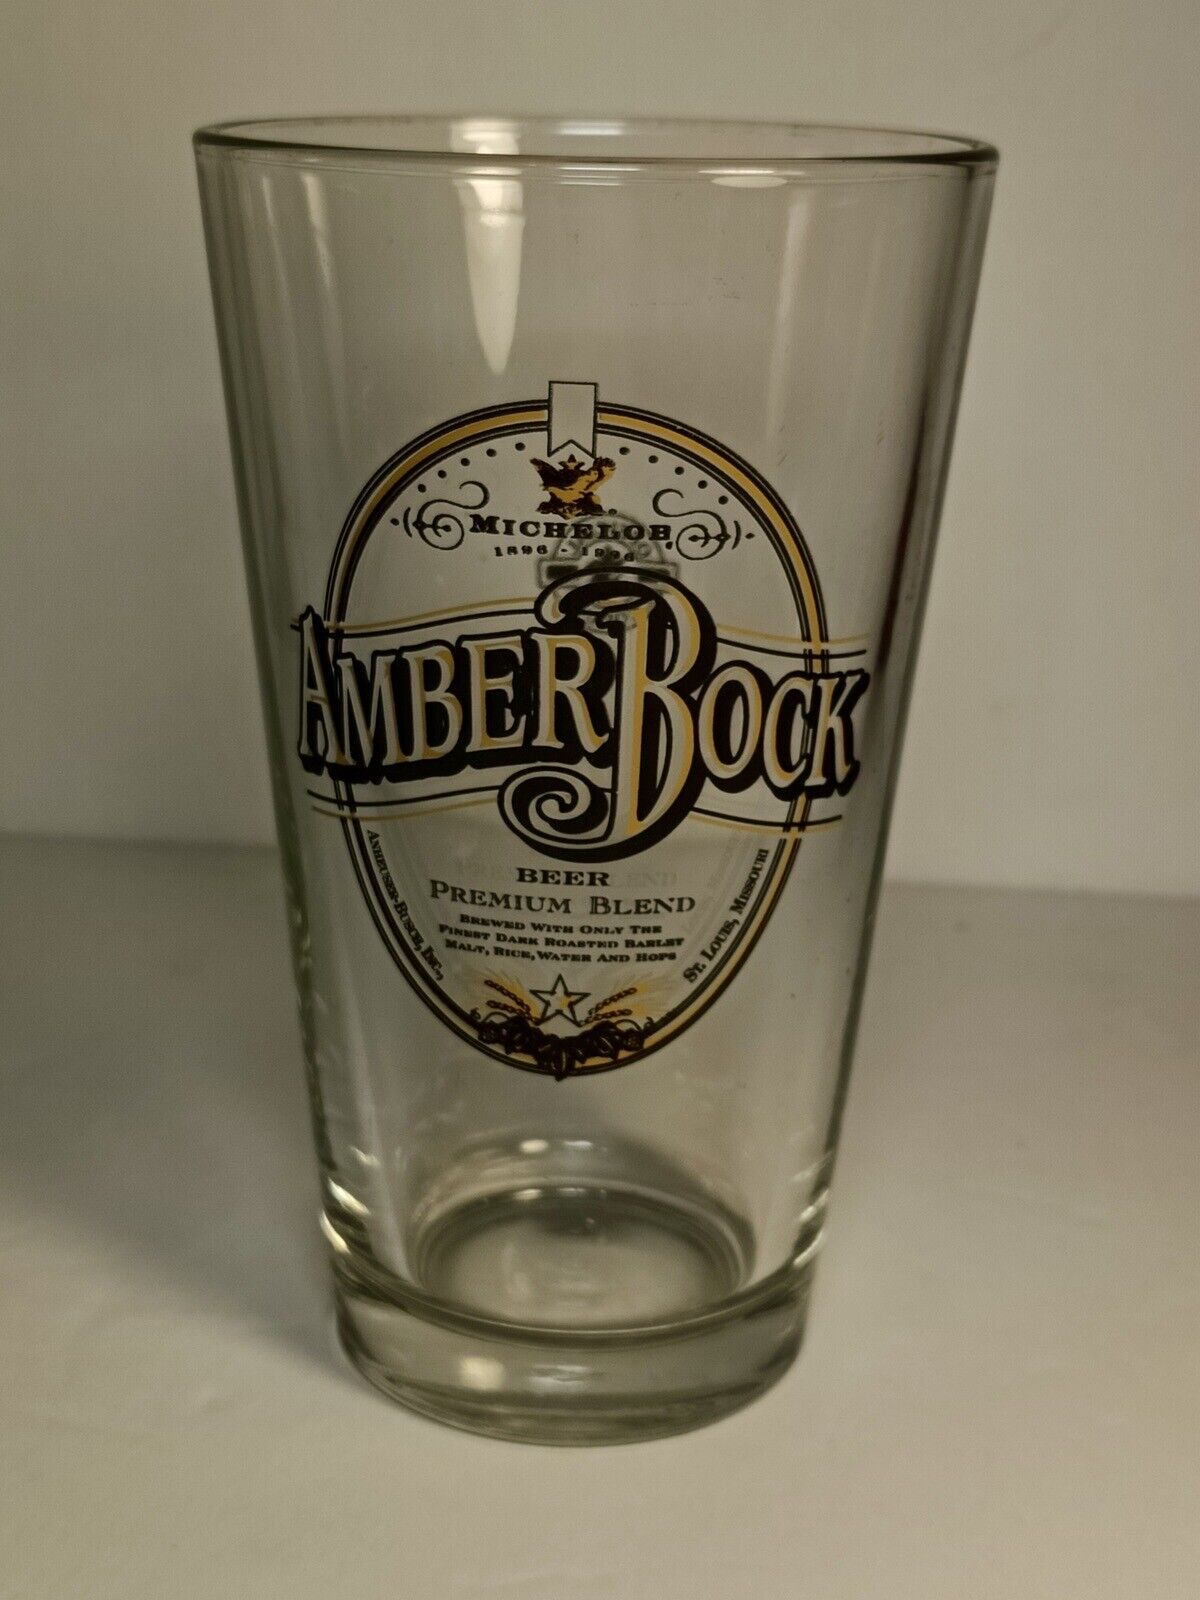 Michelob Amber Bock Premium Blend (Anheuser-Busch) Pint Glass - Retired Beer